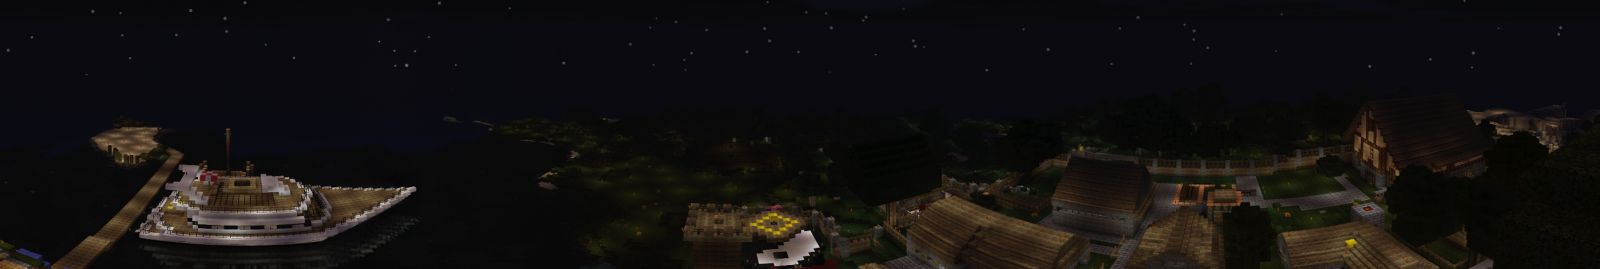 Panorama de nuit